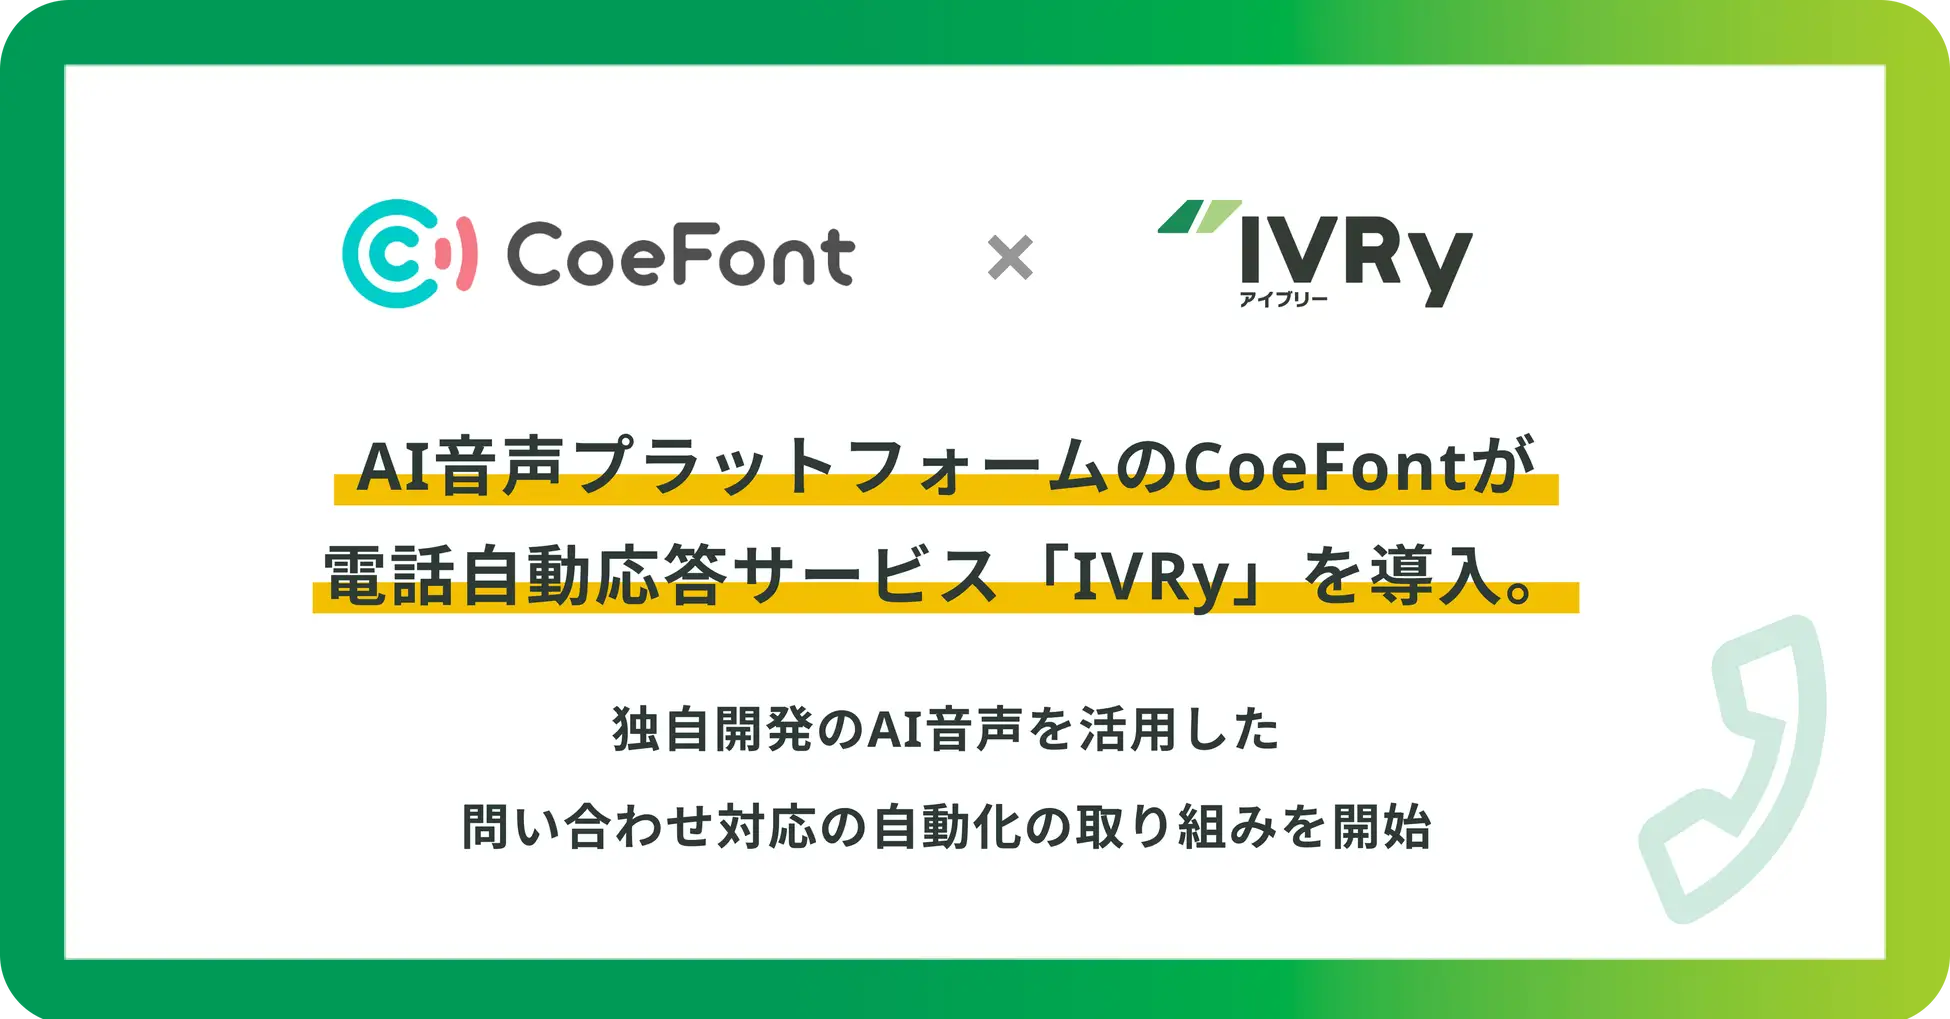 AI音声プラットフォームのCoeFontが電話自動応答サービス「IVRy」を導入。独自開発のAI音声を活用した問い合わせ対応の自動化の取り組みを開始